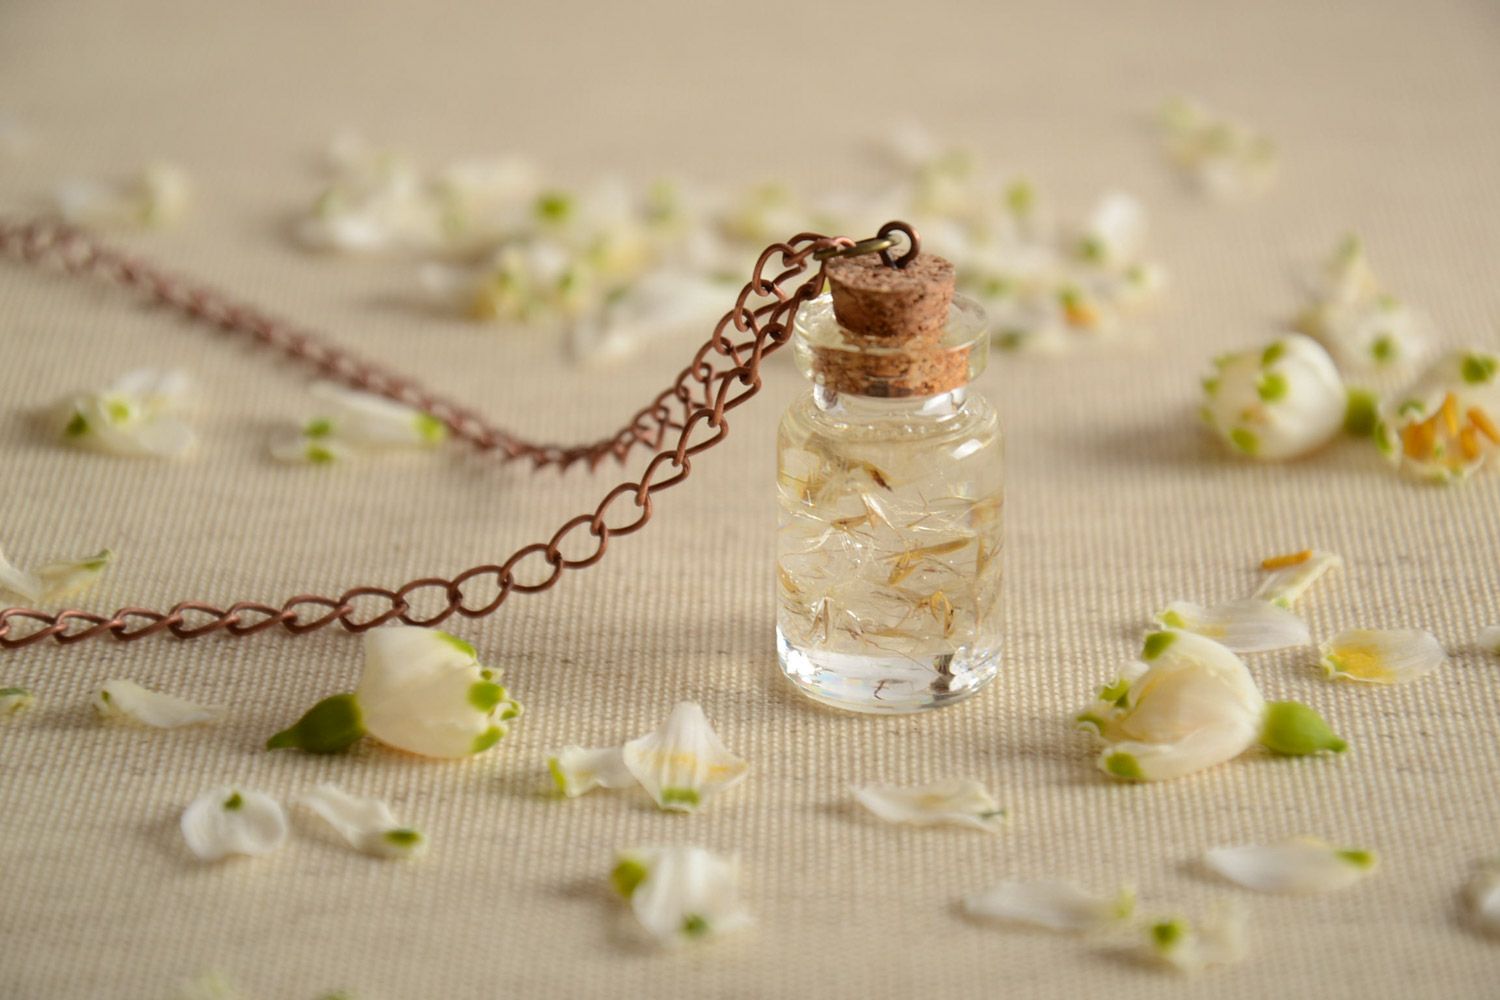 Handmade glass vial pendant with flowers in epoxy resin inside Dandelions photo 1